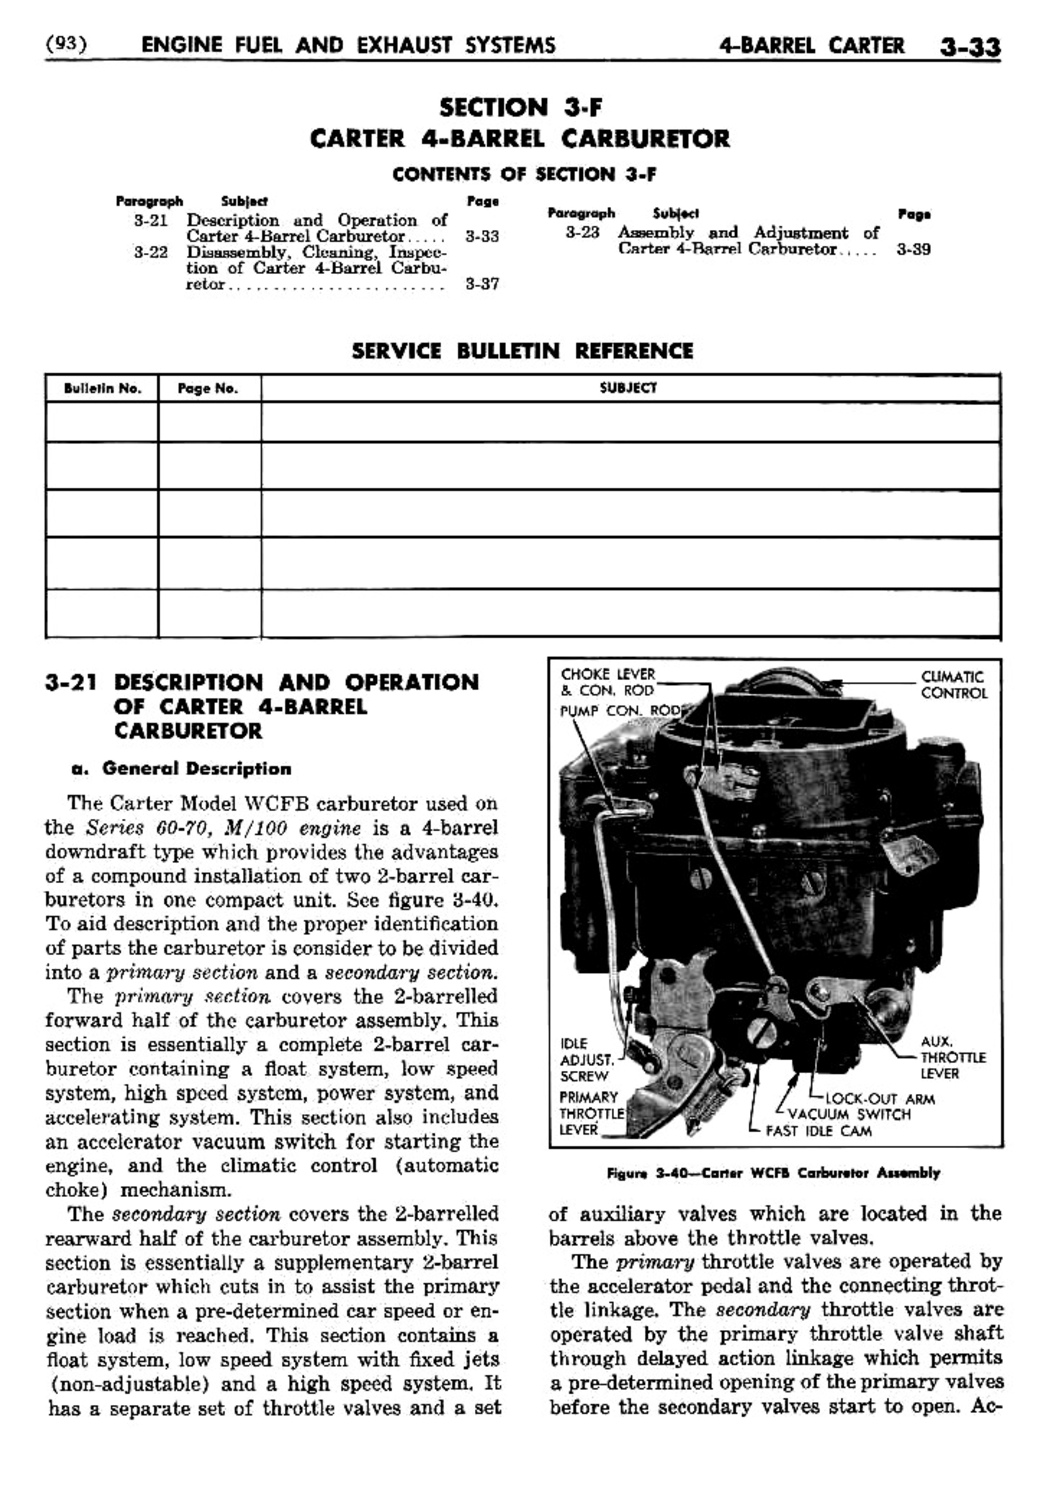 n_04 1954 Buick Shop Manual - Engine Fuel & Exhaust-033-033.jpg